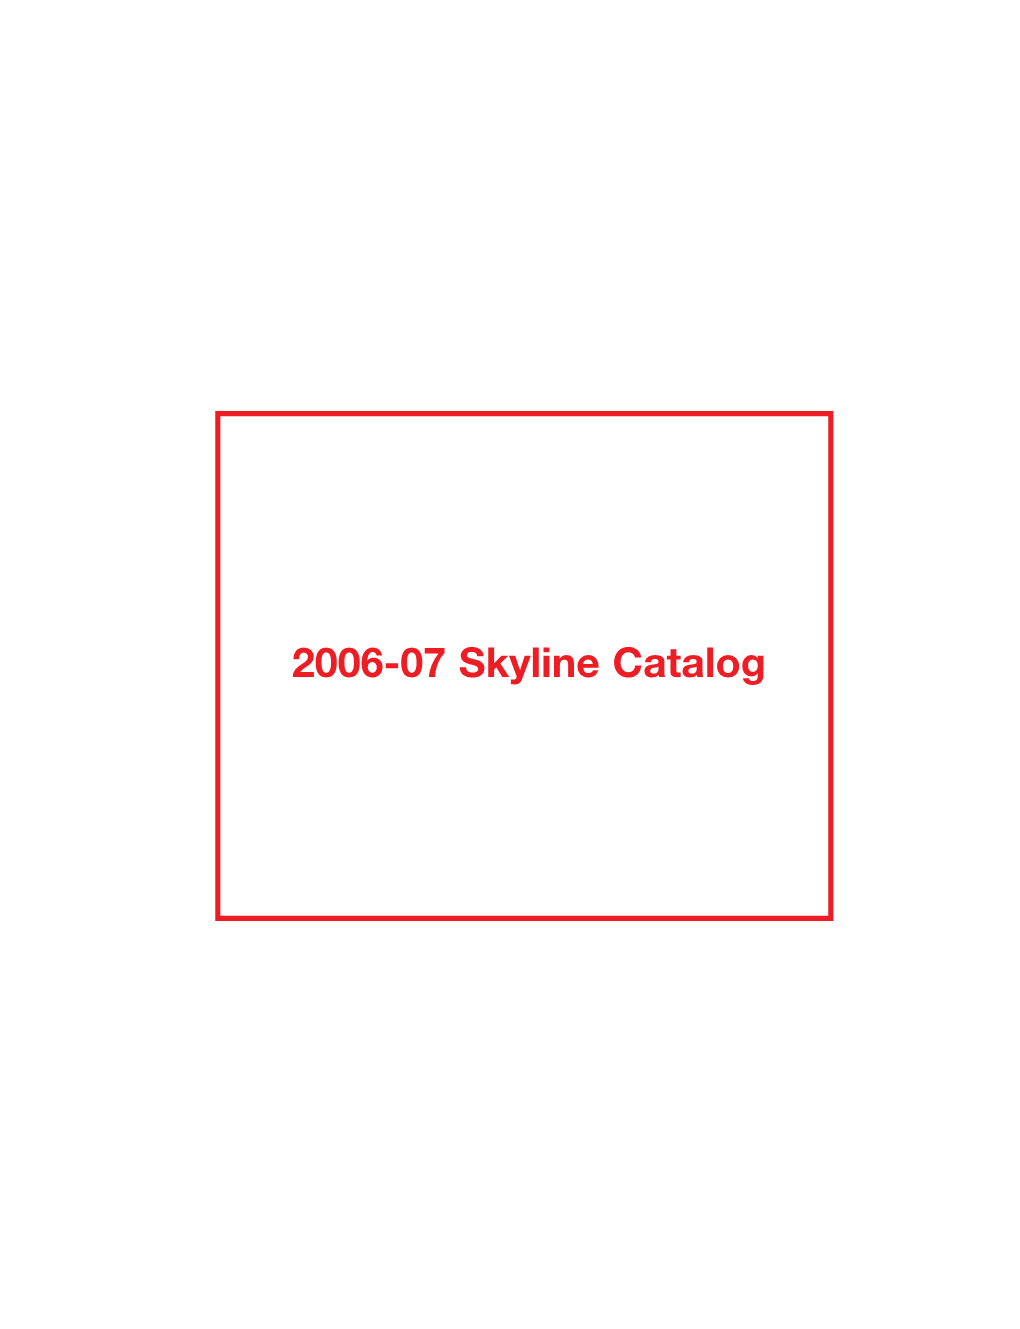 2006-07 Skyline Catalog Page 2 Is Blank SKYLINE COLLEGE CATALOG 2006/2007